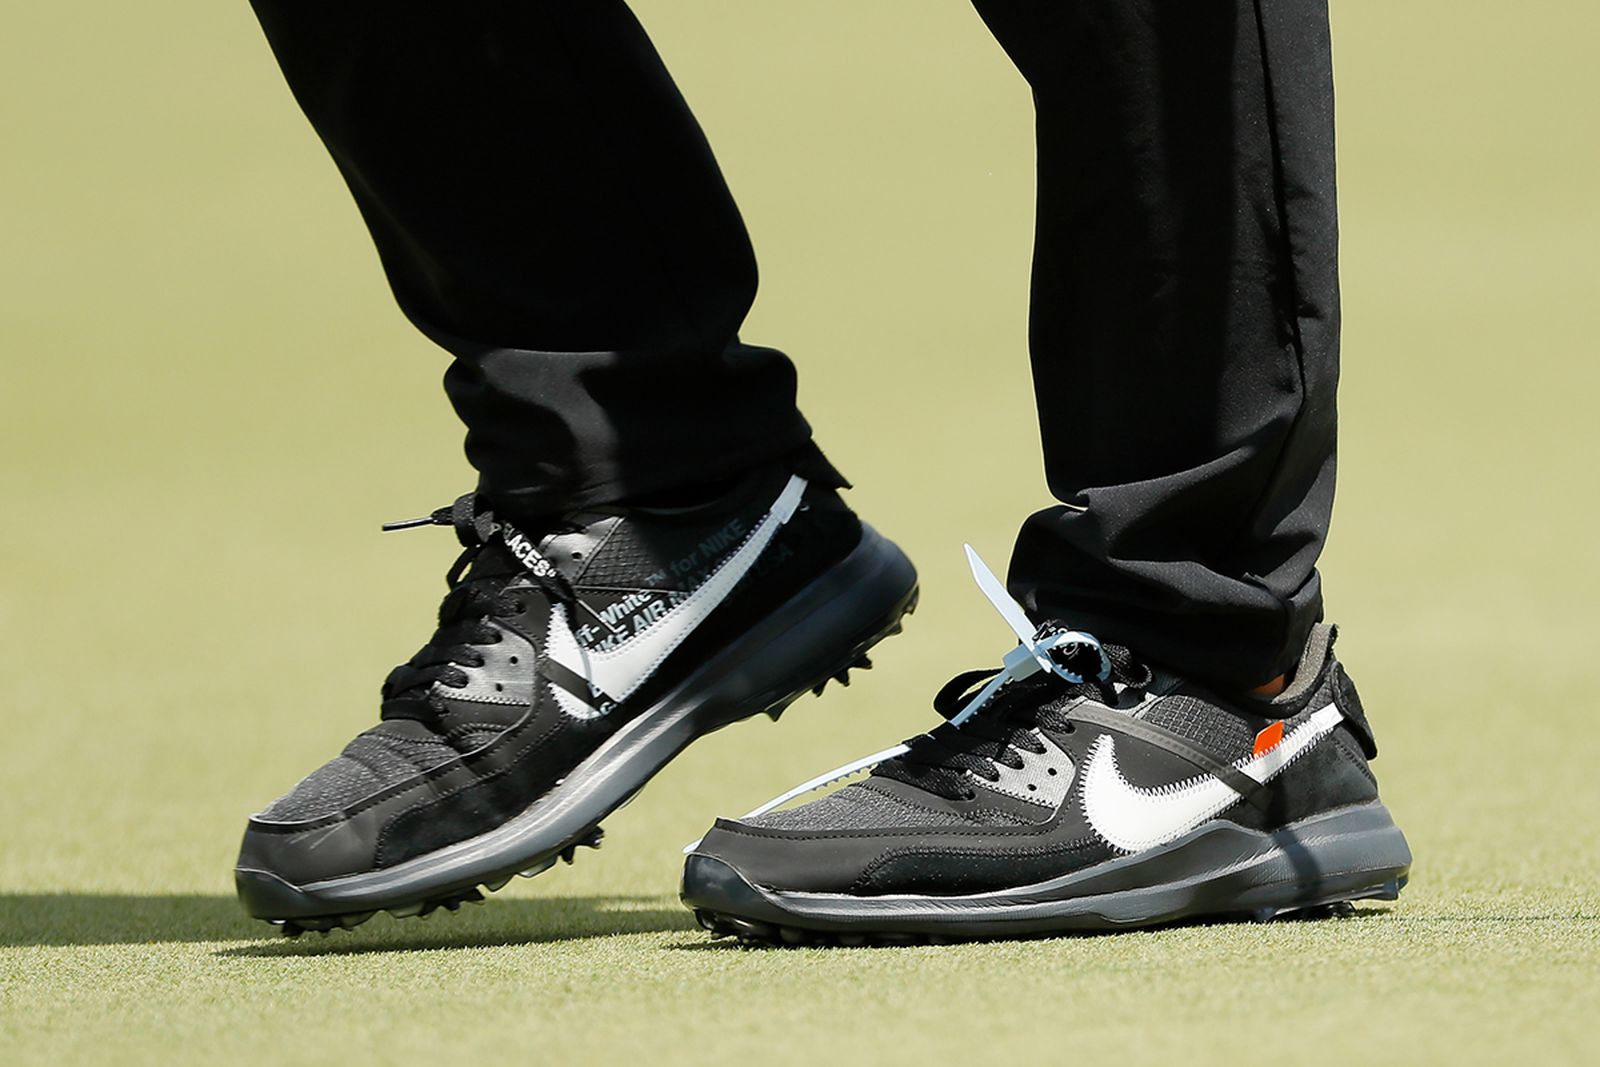 Brooks Koepka Off-White Nike golf shoes